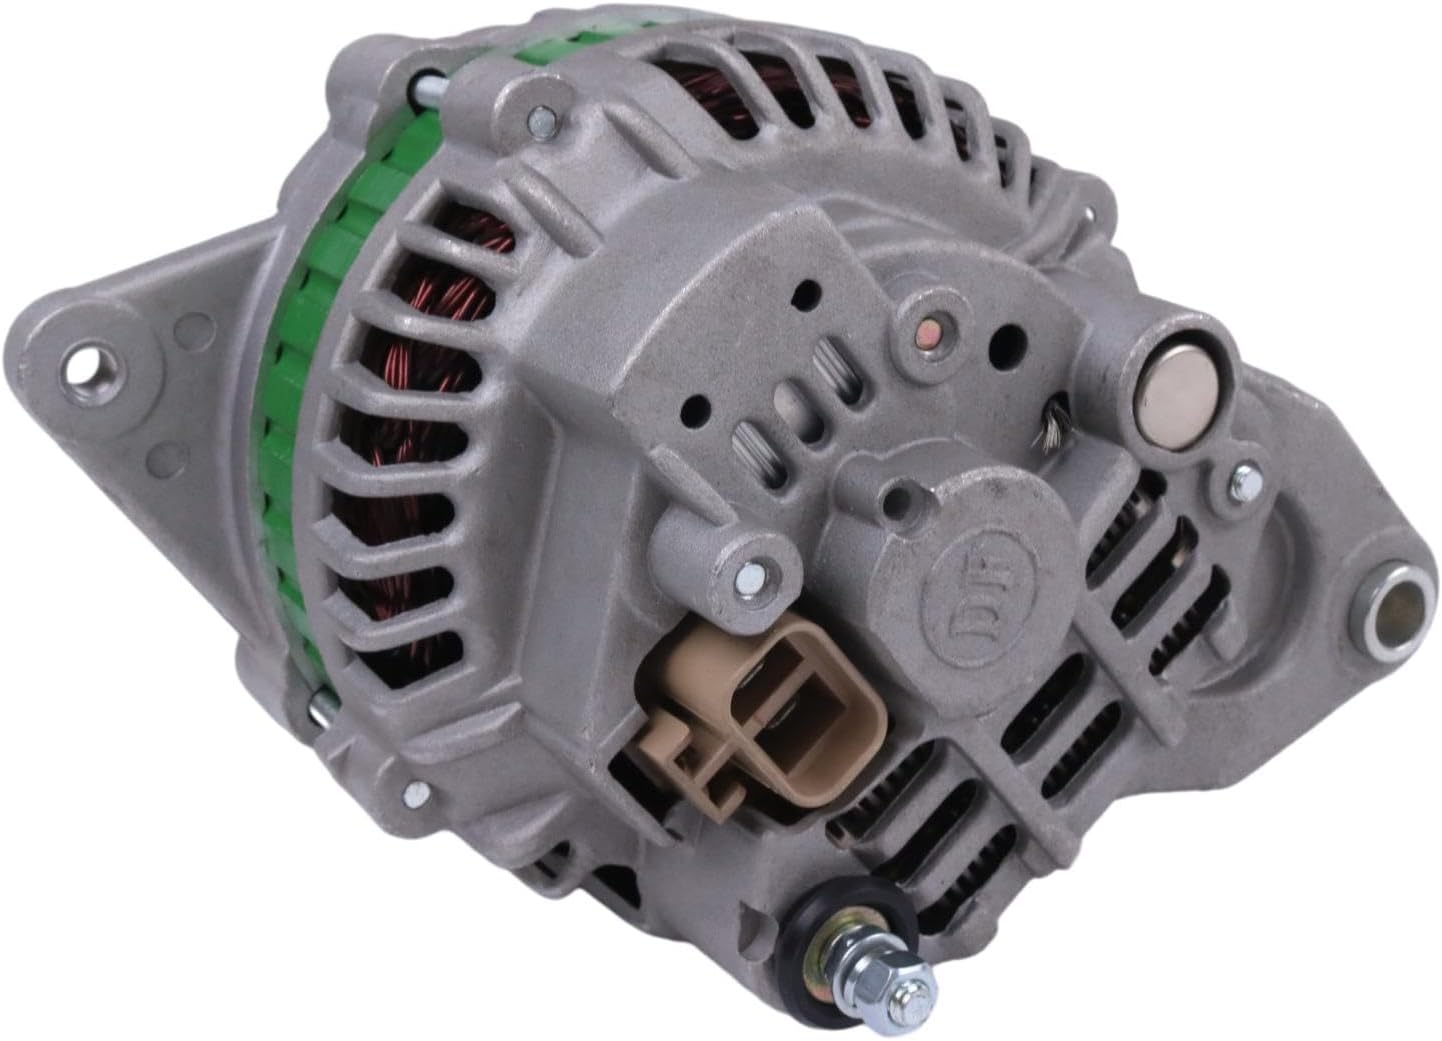 12 Volts 80 Amps alternator 397-9953 for Caterpillar CAT wheel-type loader 908K 906K 908M 906M 907K 907M 906H2 907H2 908H2